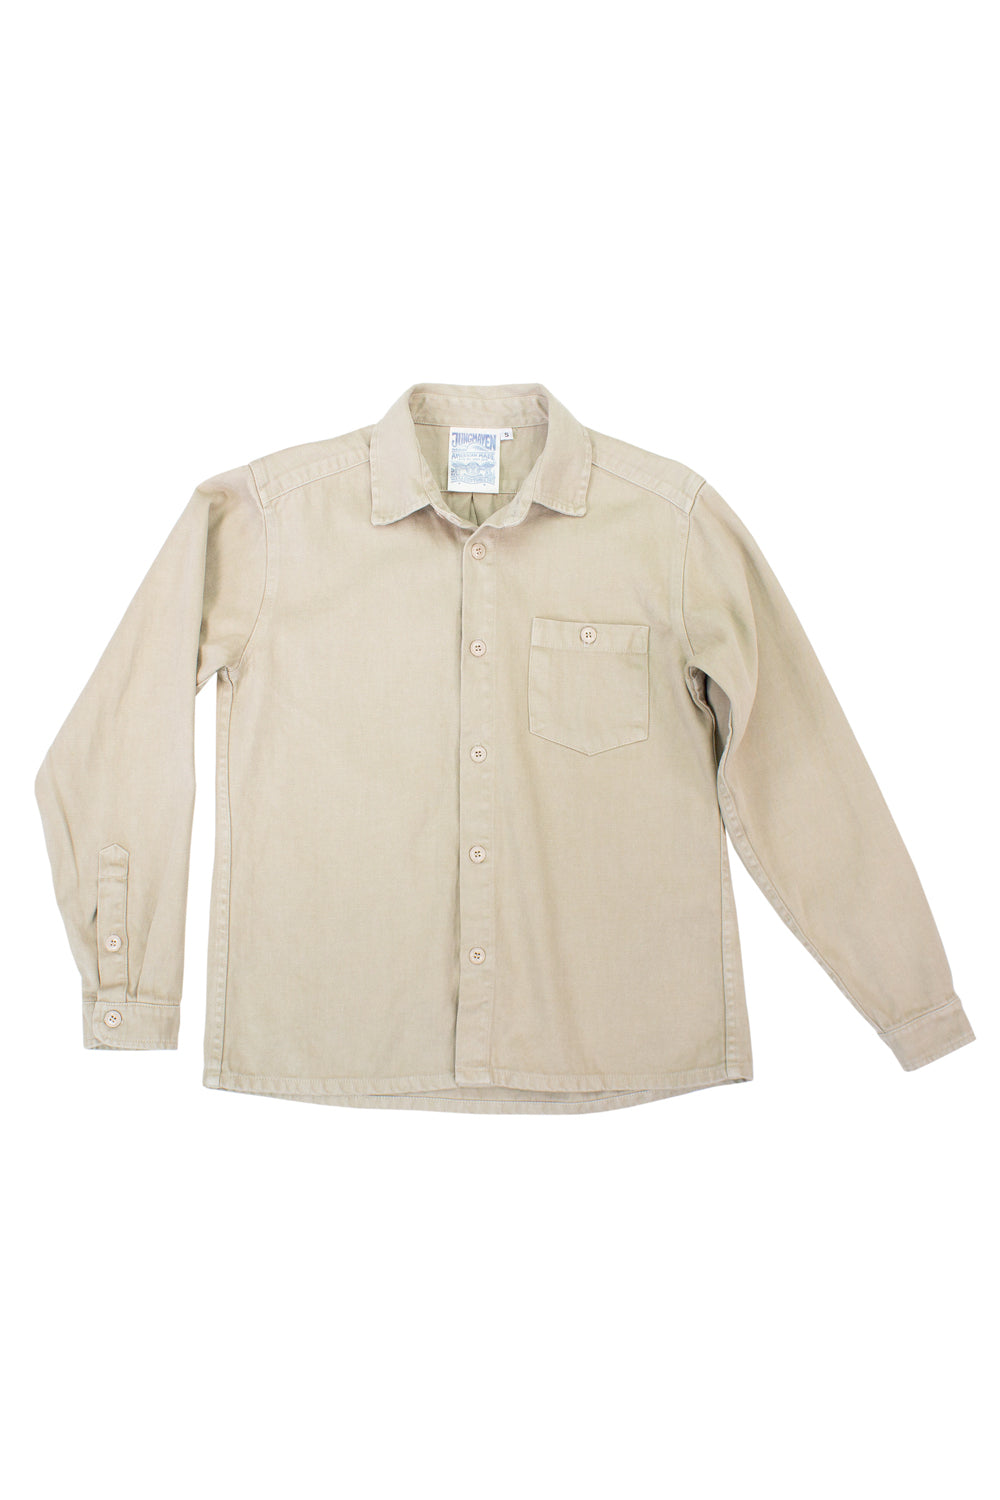 Topanga Shirt | Jungmaven Hemp Clothing & Accessories